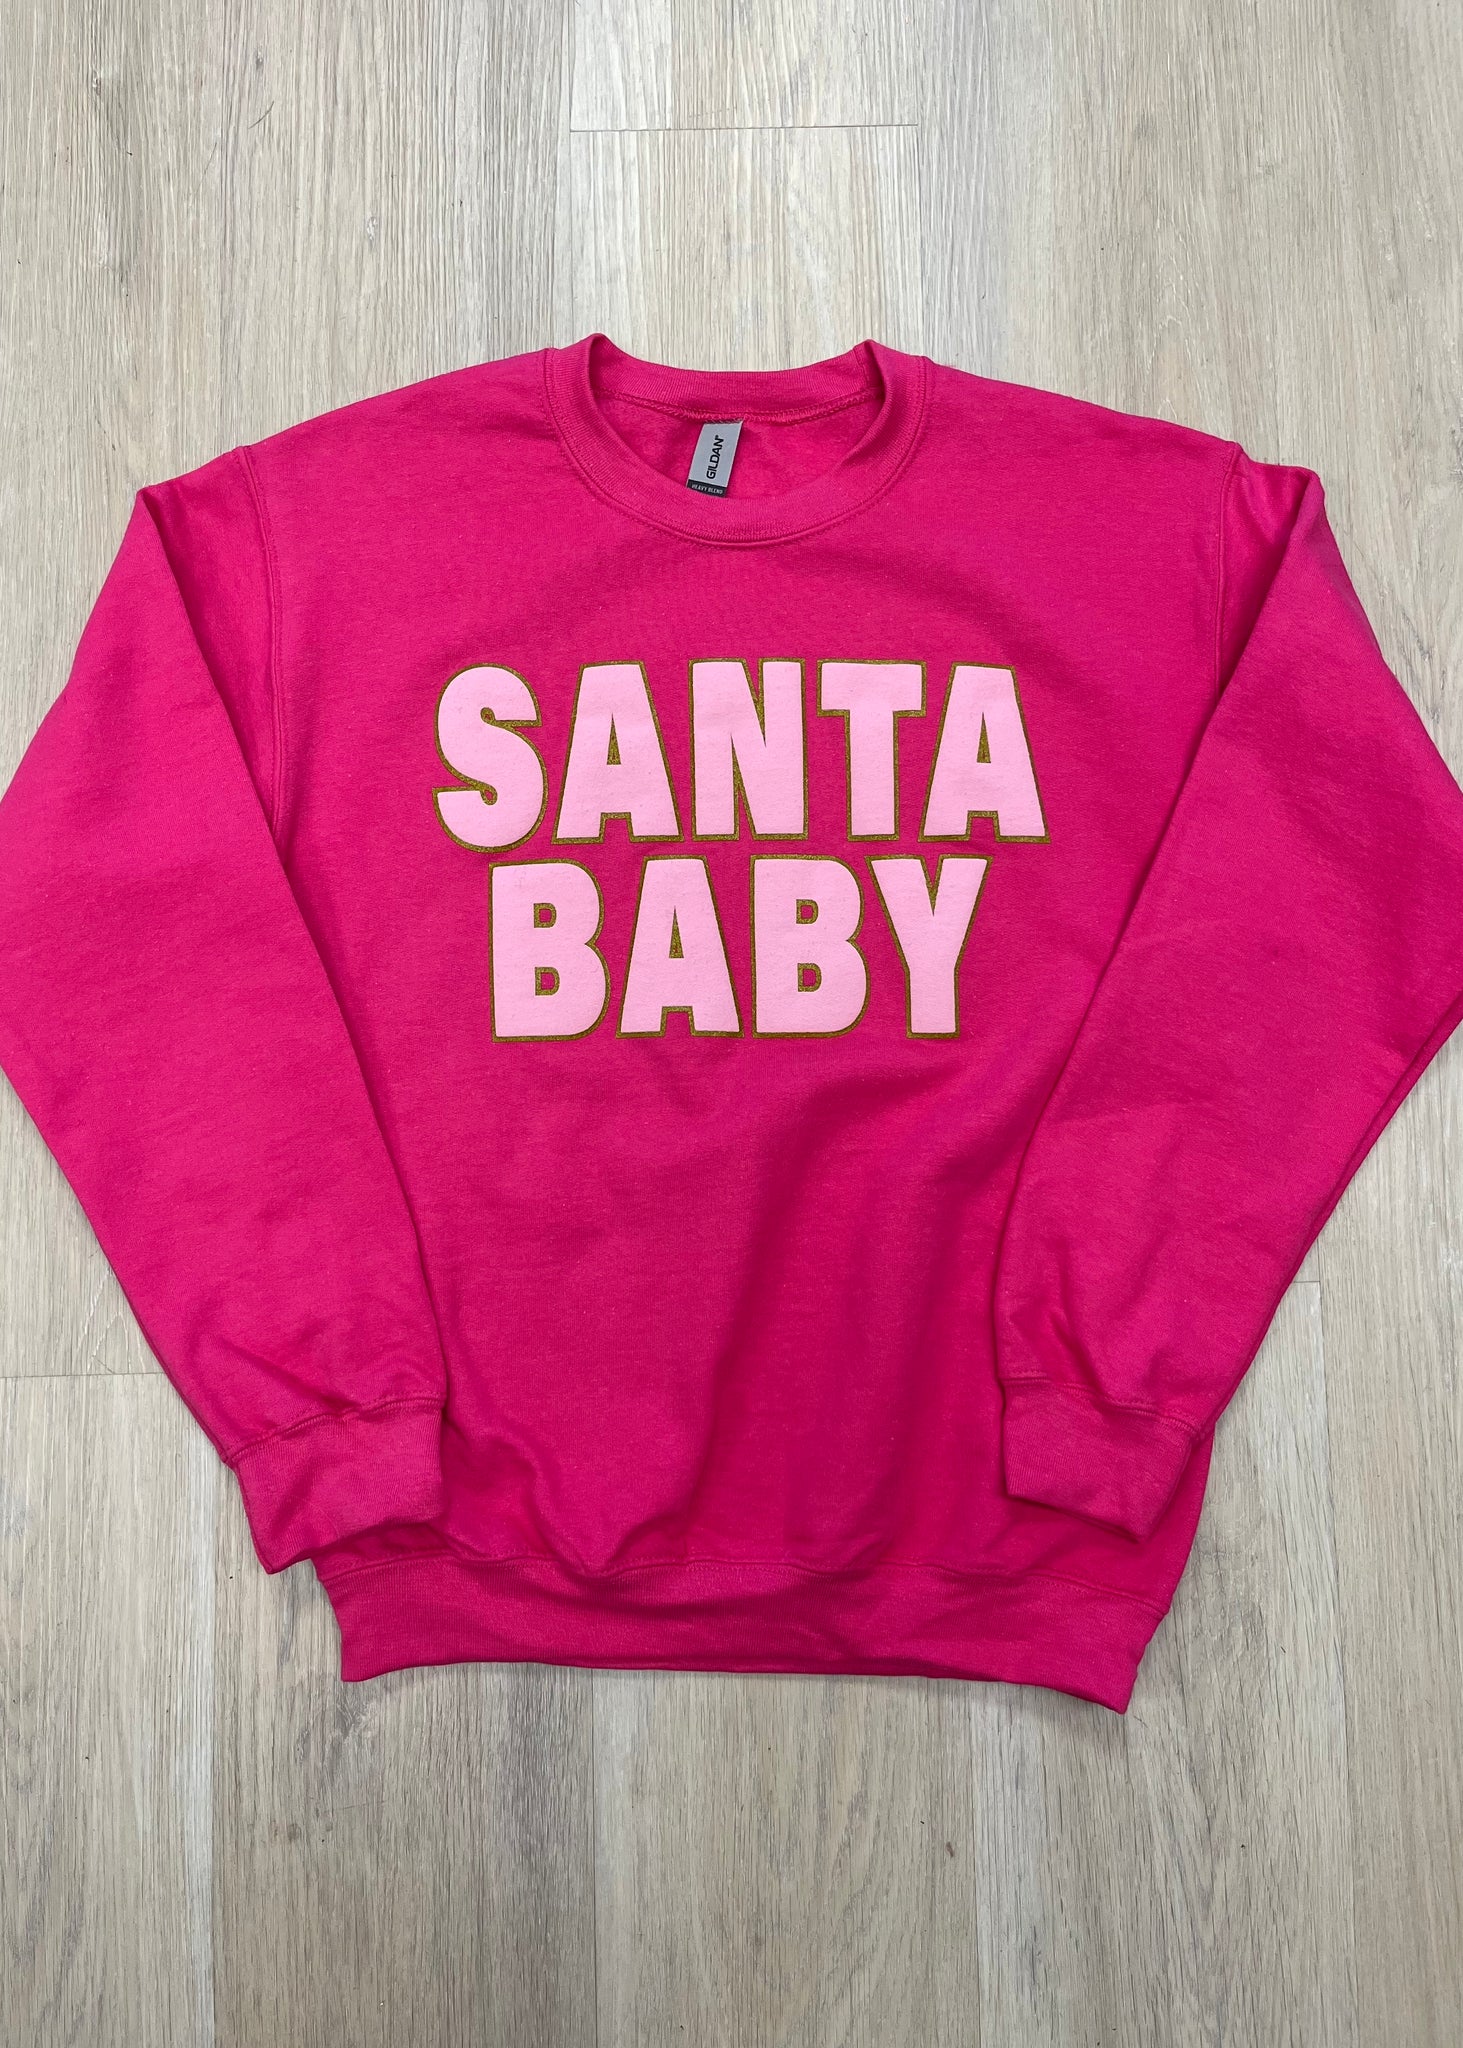 "Santa Baby" Bright Pink Sweatshirt